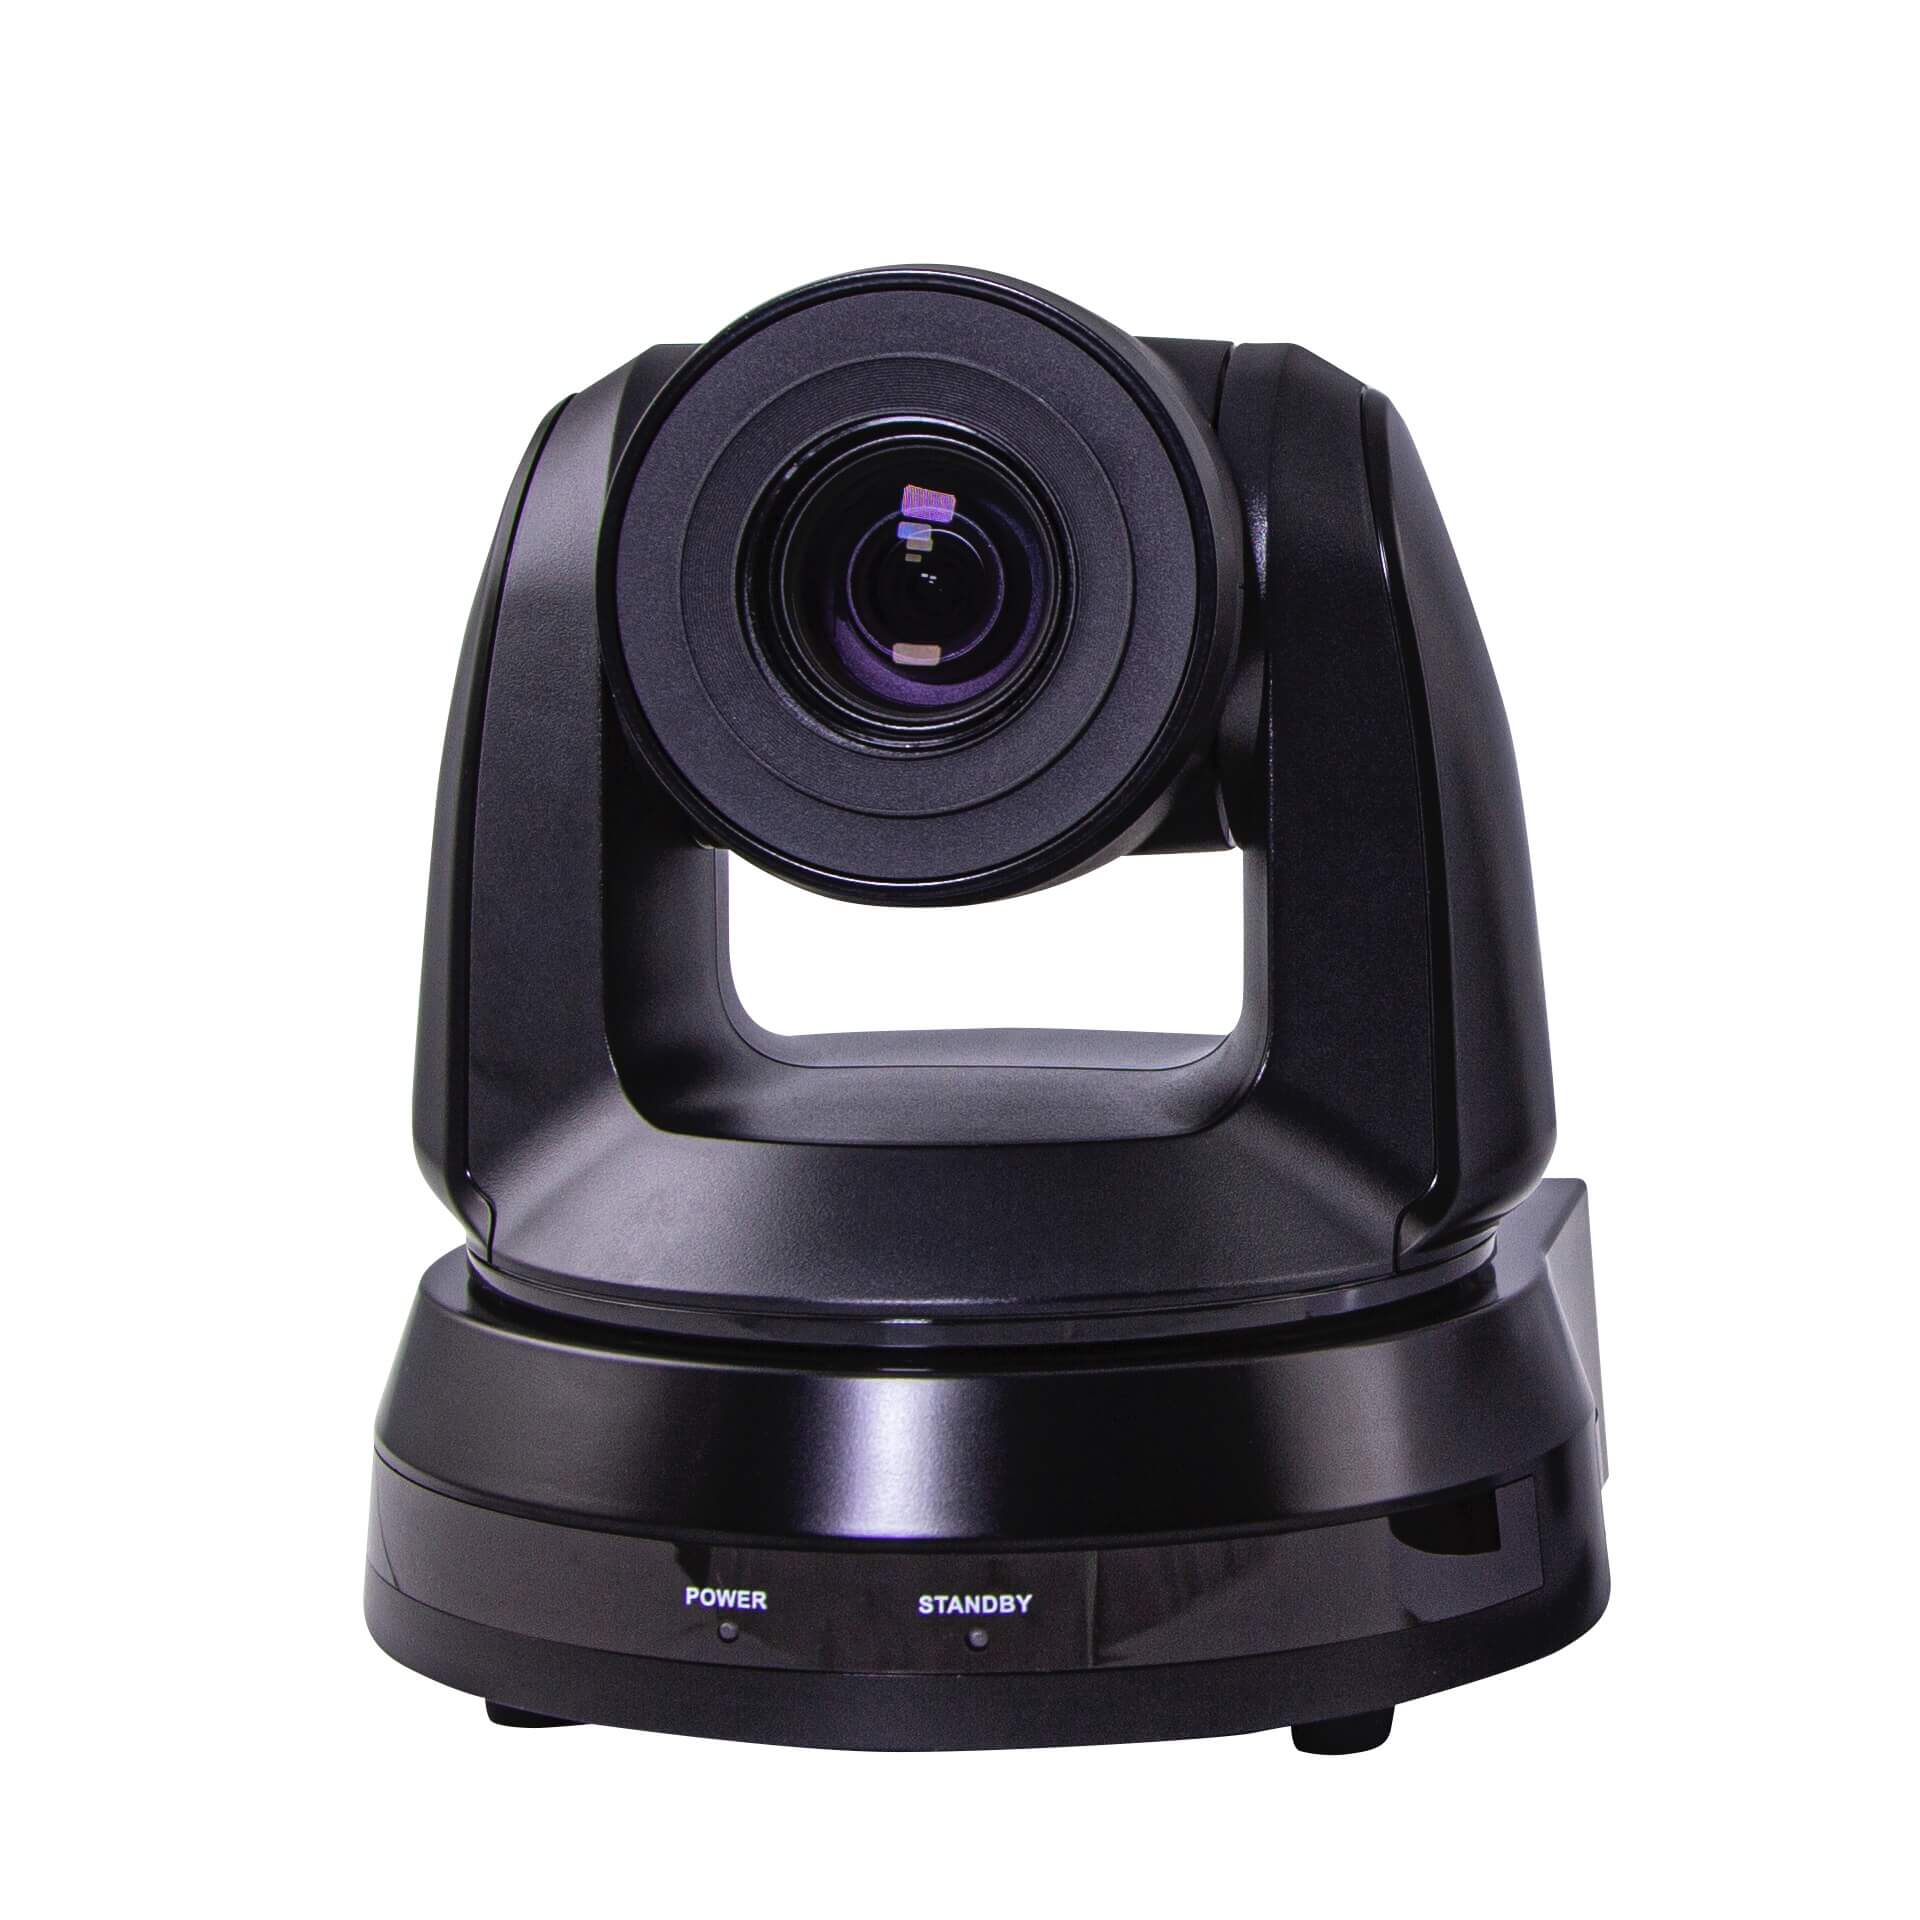 Marshall CV620-BI - Full-HD IP PTZ Video Camera with 20x Optical Zoom, front